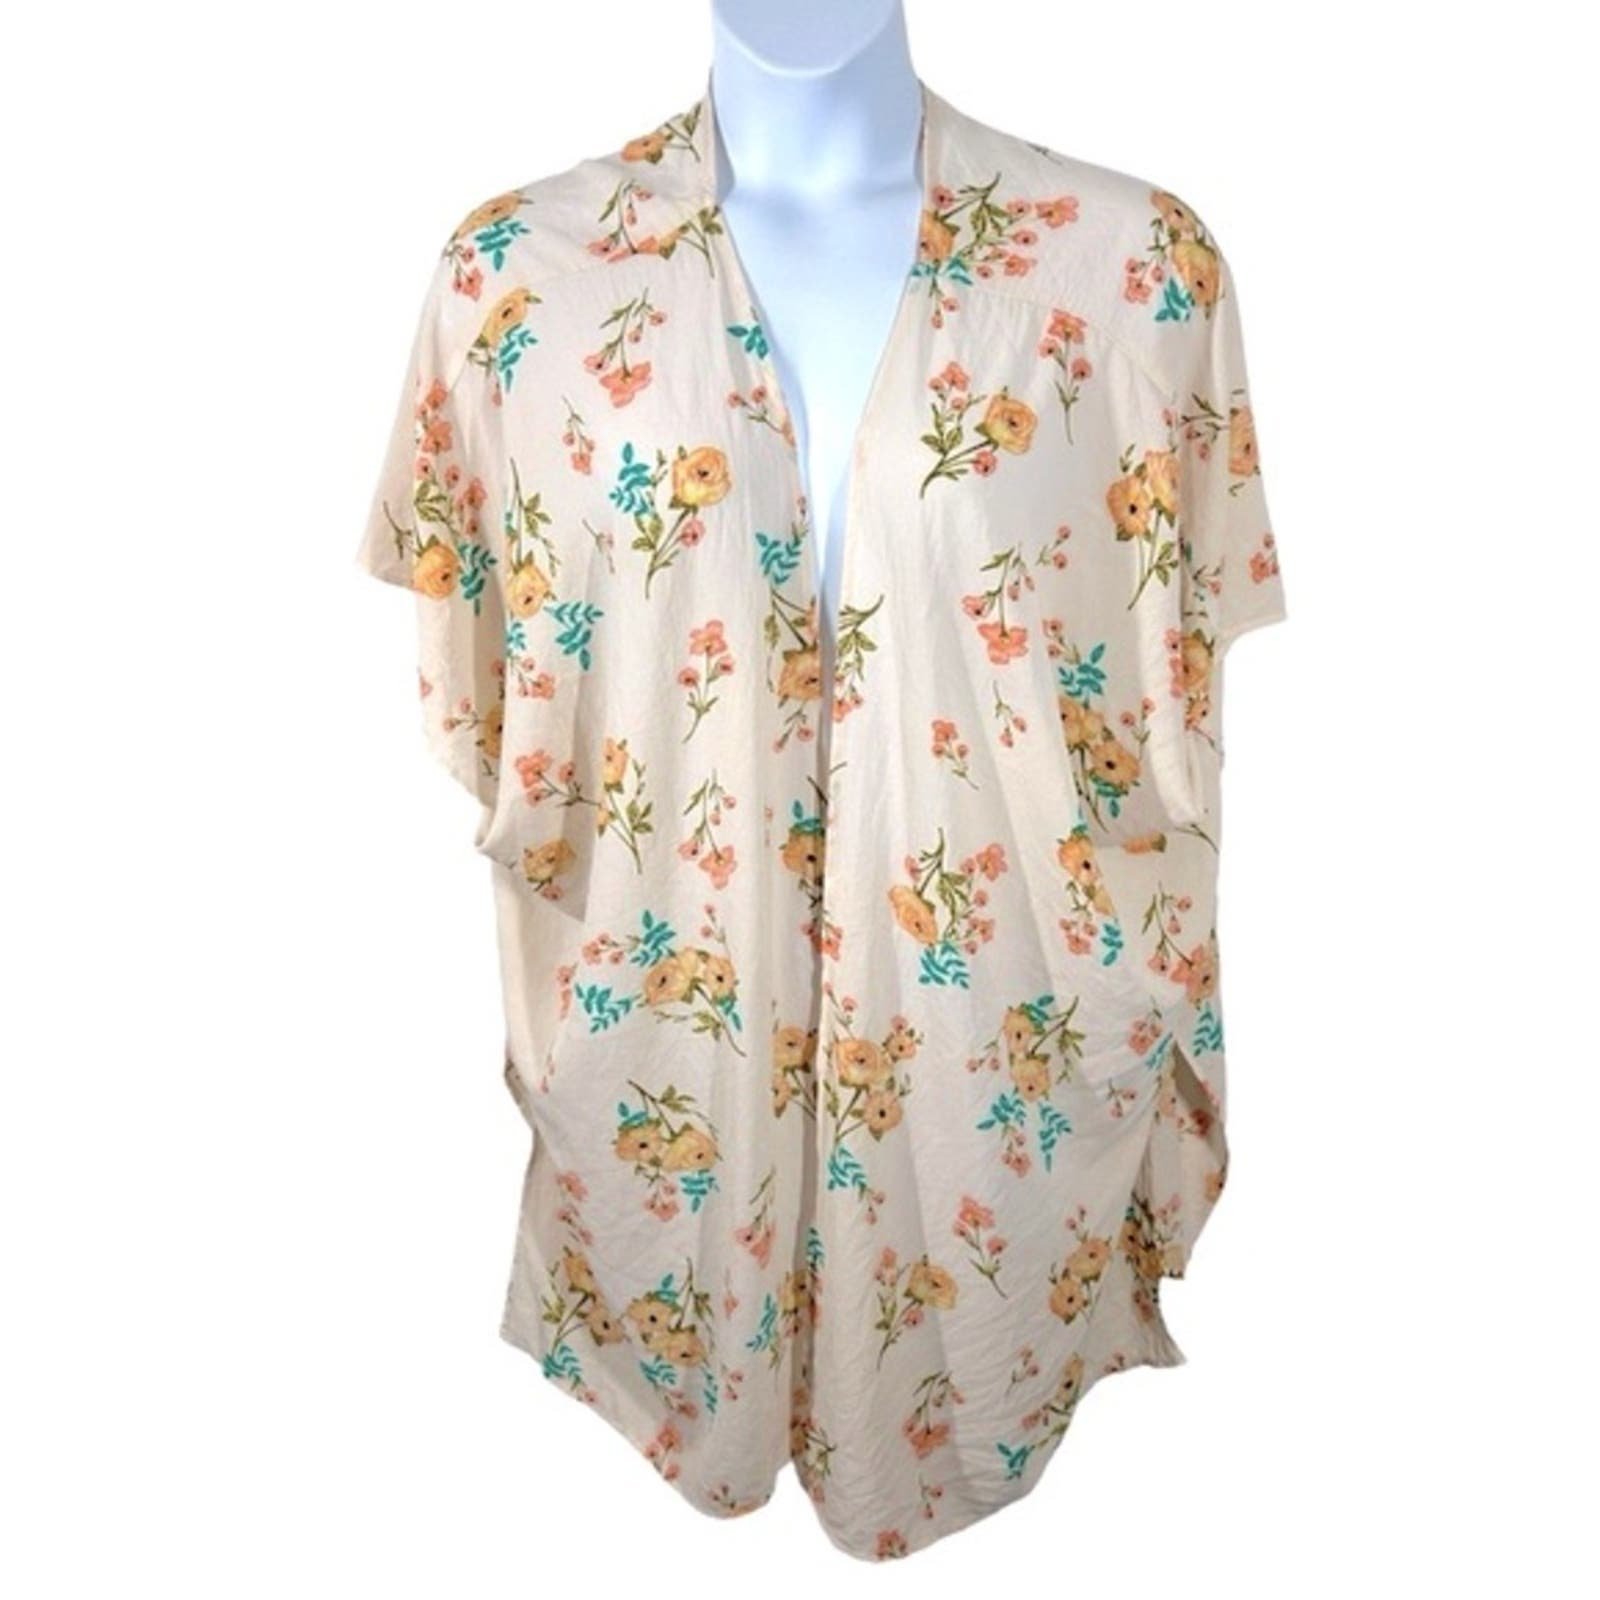 Wholesale price Umgee Boho Floral Print Open Front Wing Sleeve Kimono Size Small/Medium NTOSCwfaS Everyday Low Prices